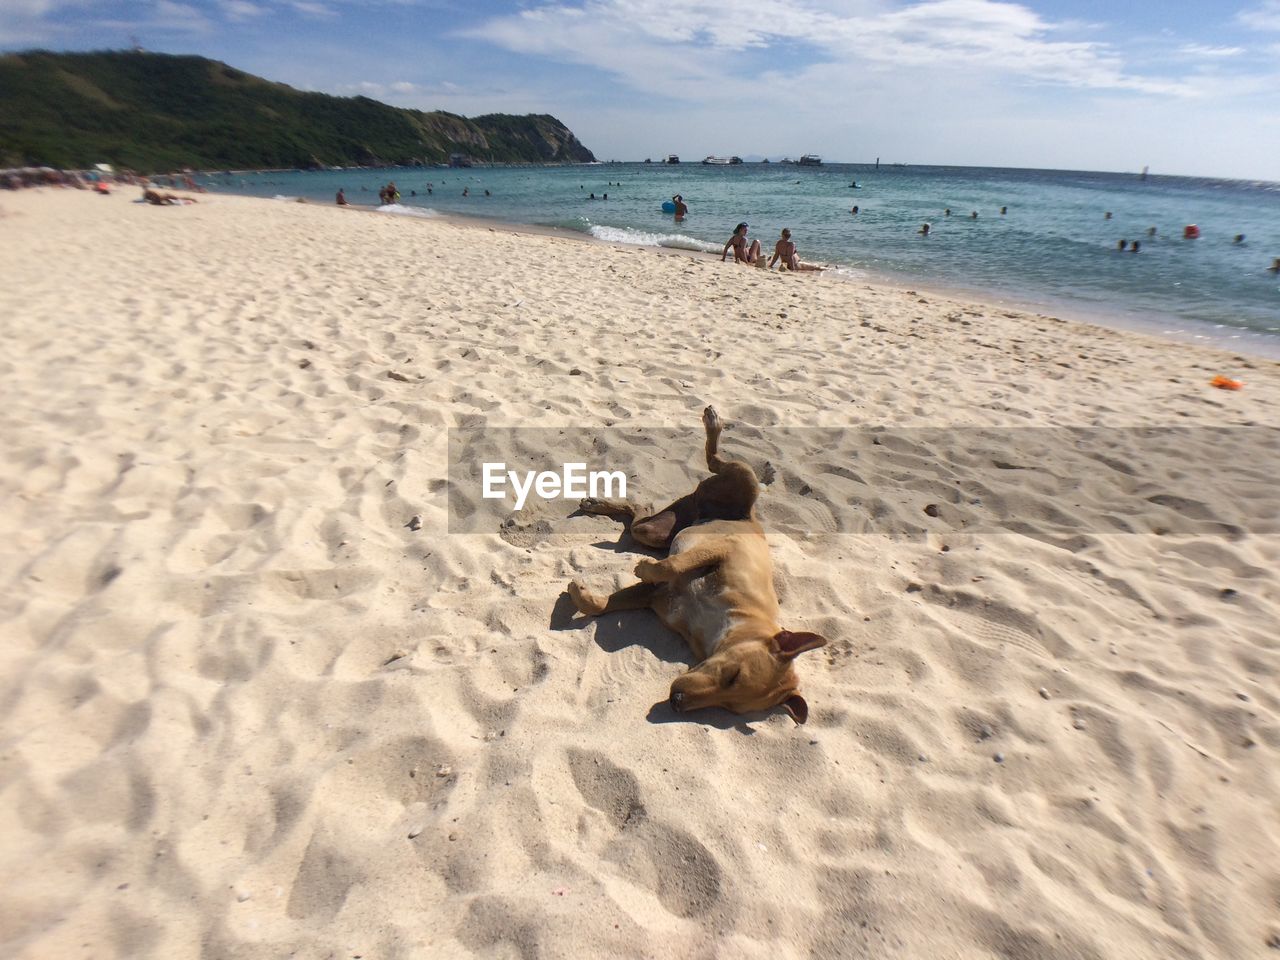 DOGS ON BEACH